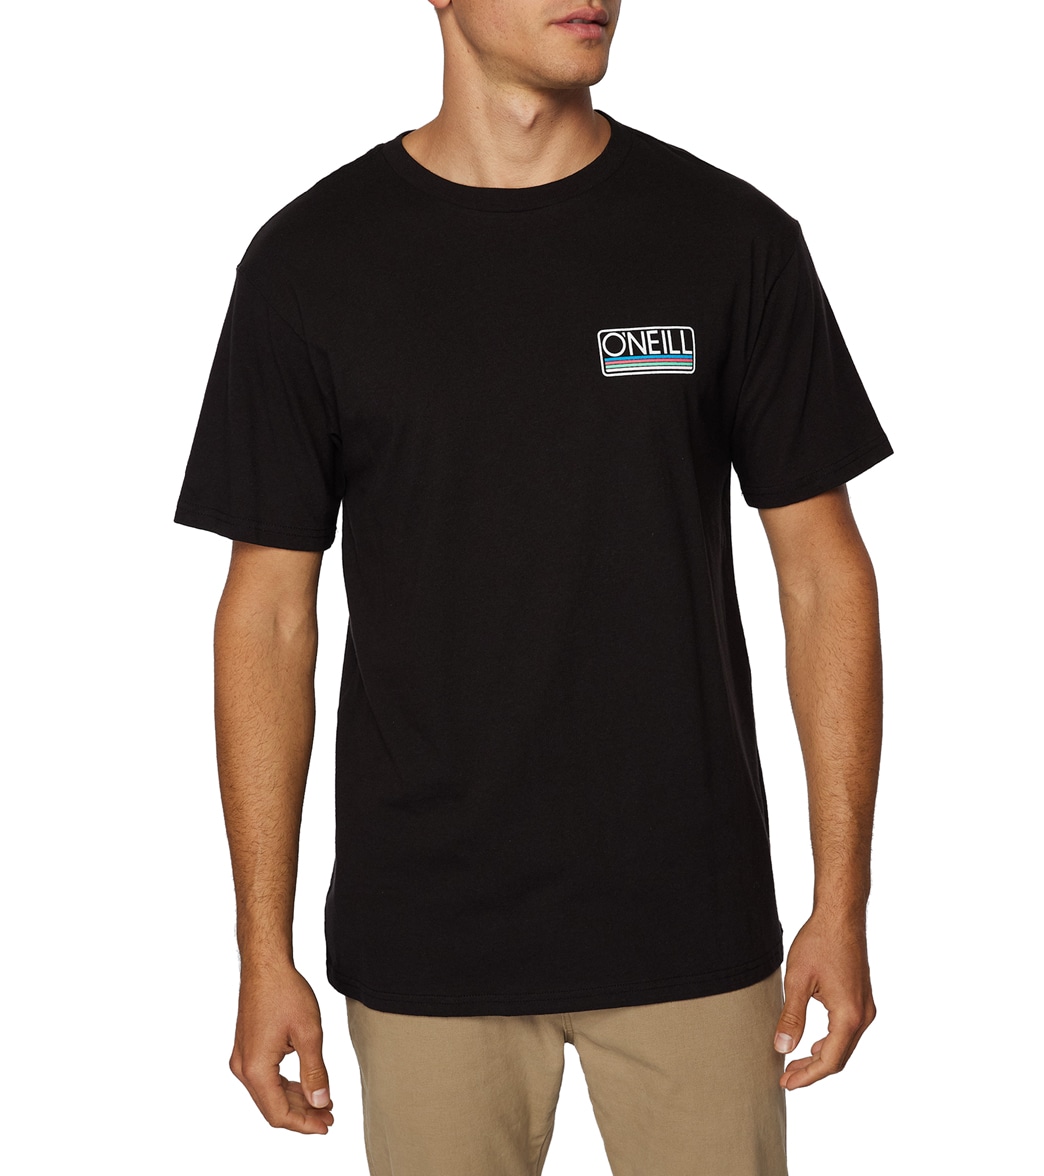 O'neill Men's Headquarters 2 Short Sleeve Tee Shirt - Black Large Cotton - Swimoutlet.com